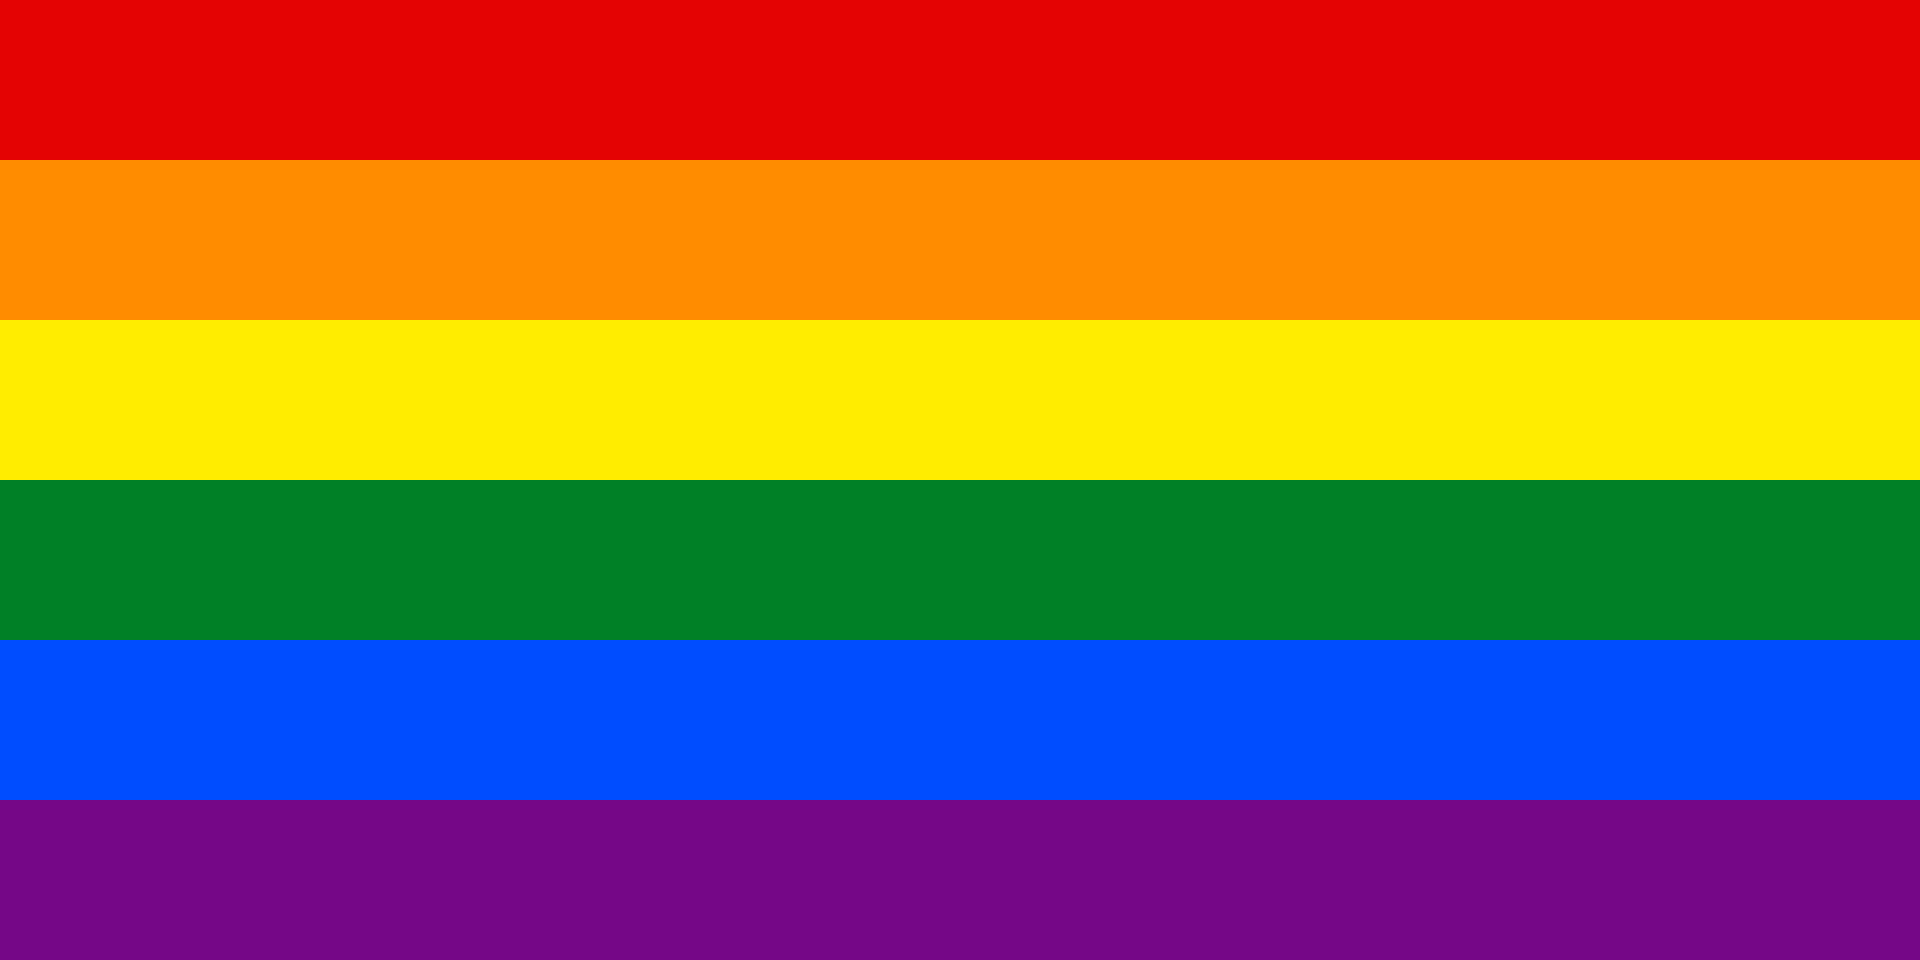 Pride flag raising ceremony 9am tomorrow at FCC